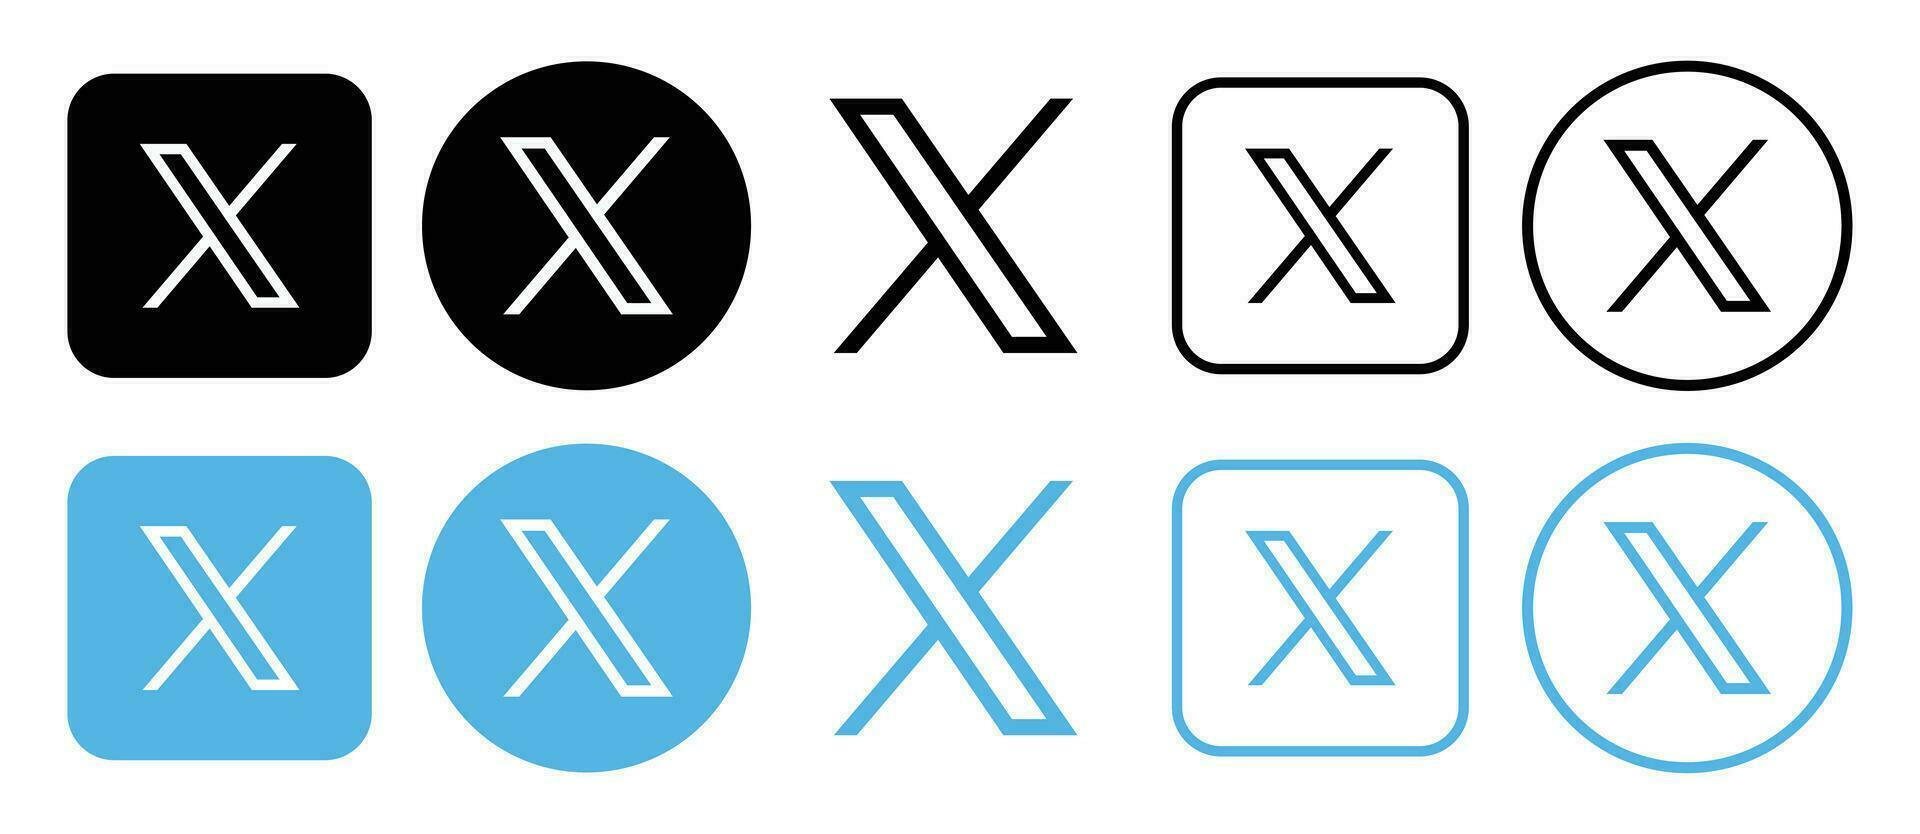 gorjeo nuevo logo . gorjeo iconos nuevo gorjeo logo X 2023. gorjeo logo. X vector